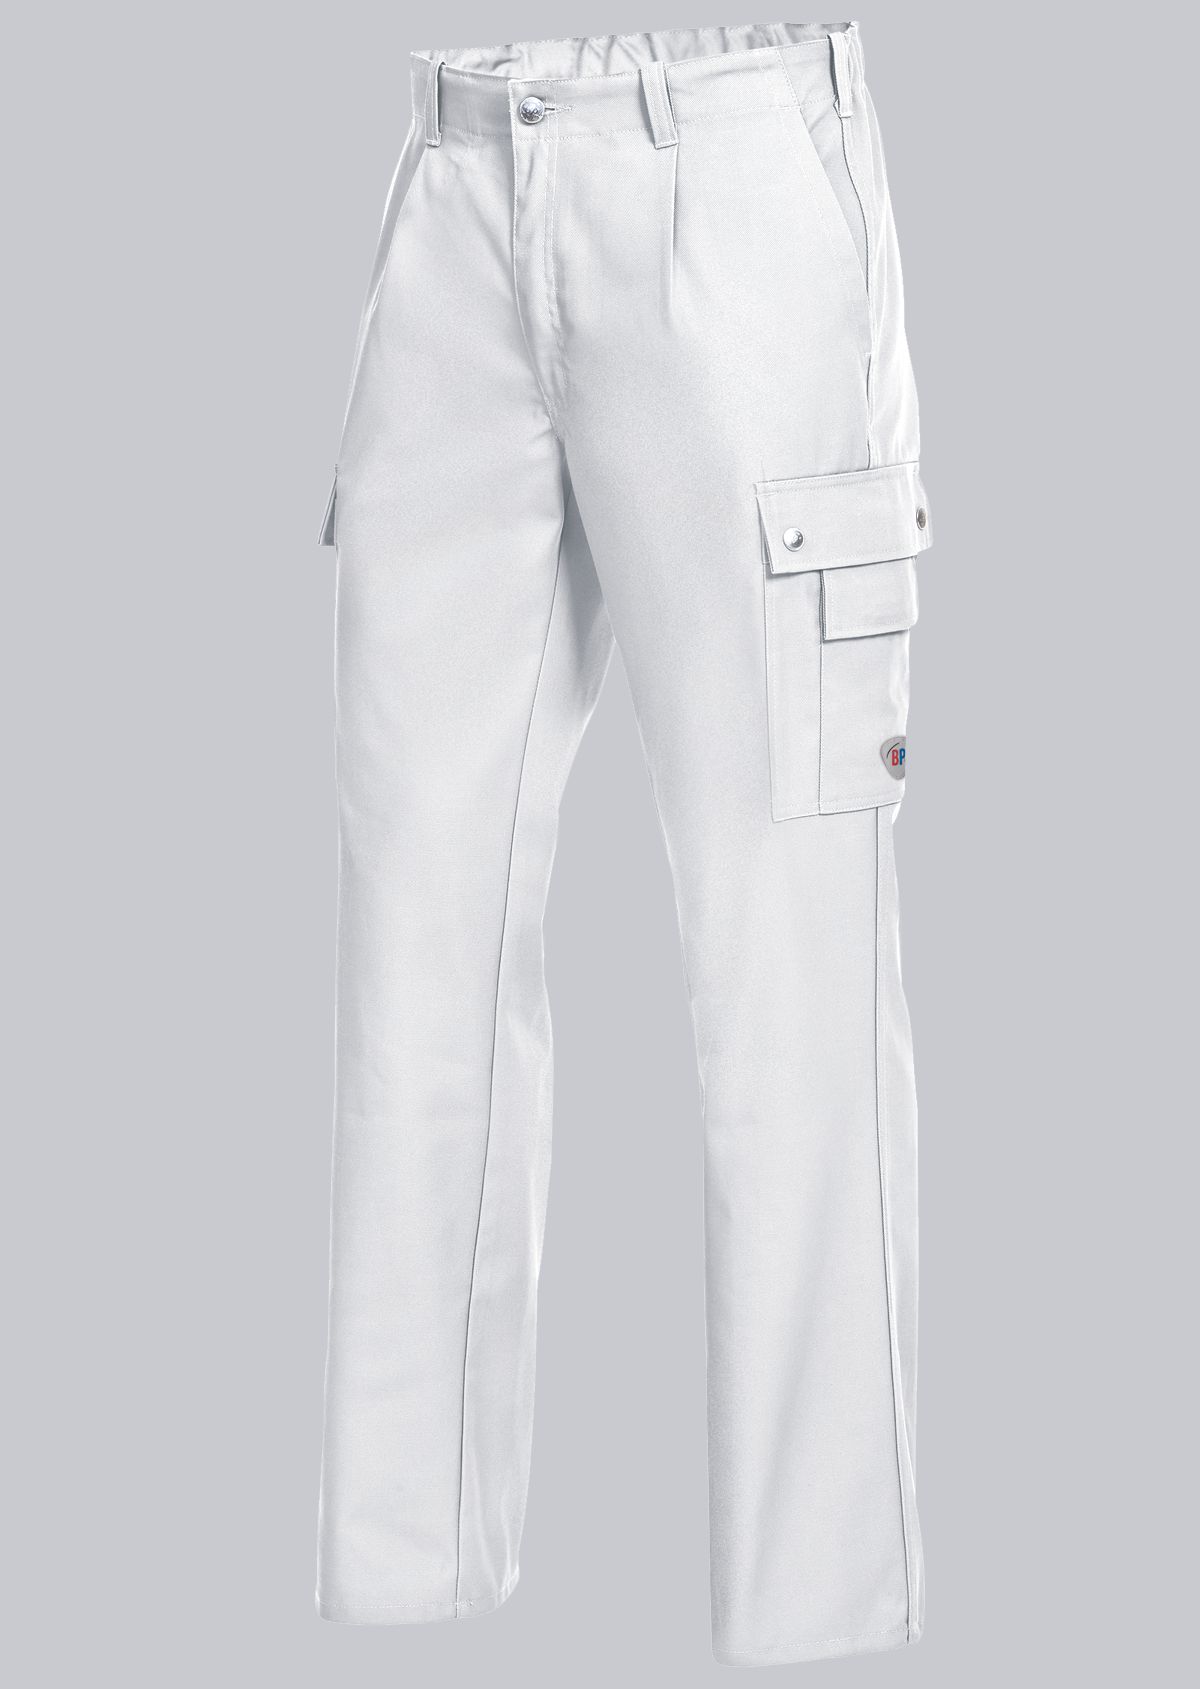 BP® Comfort cargo trousers